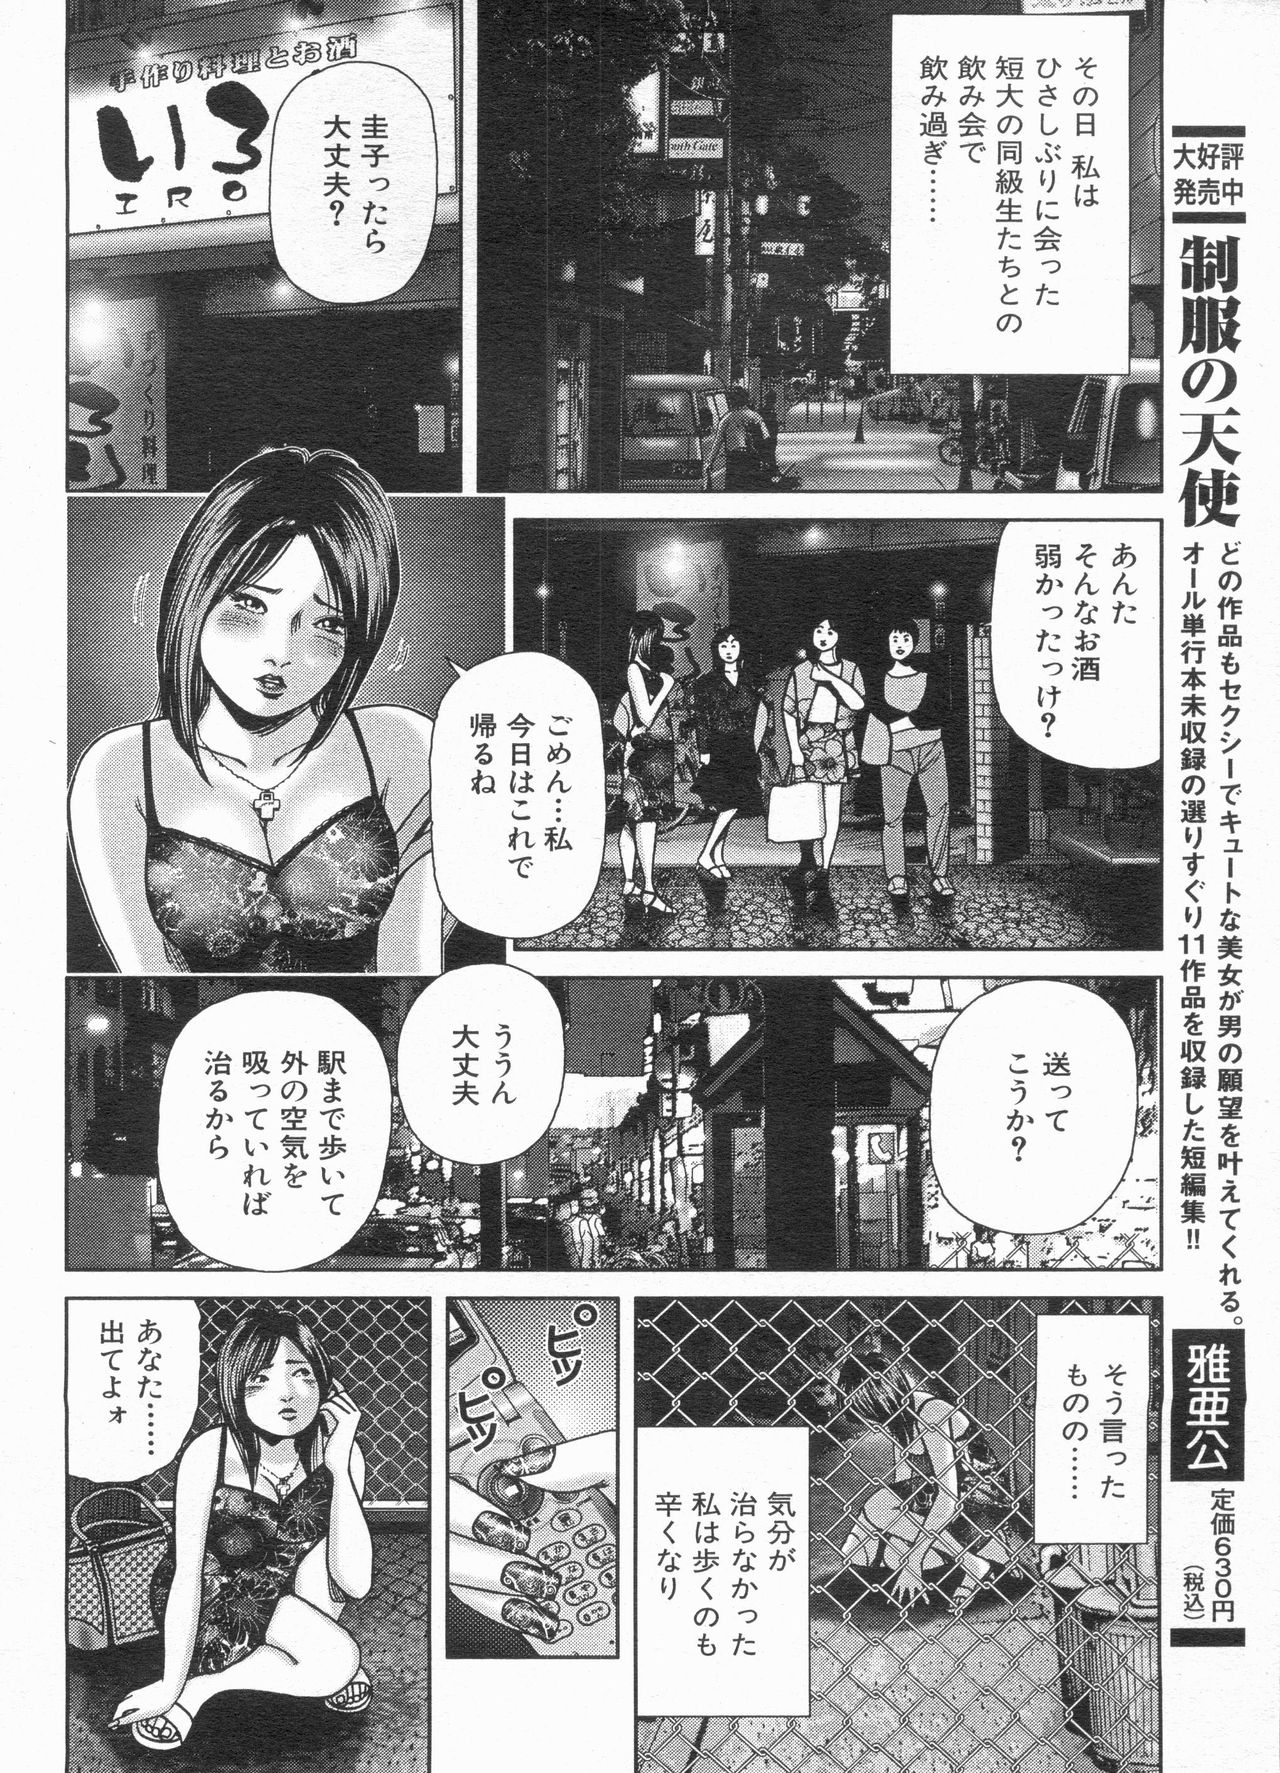 Manga Bon 2013-06 漫画ボン 2013年6月号